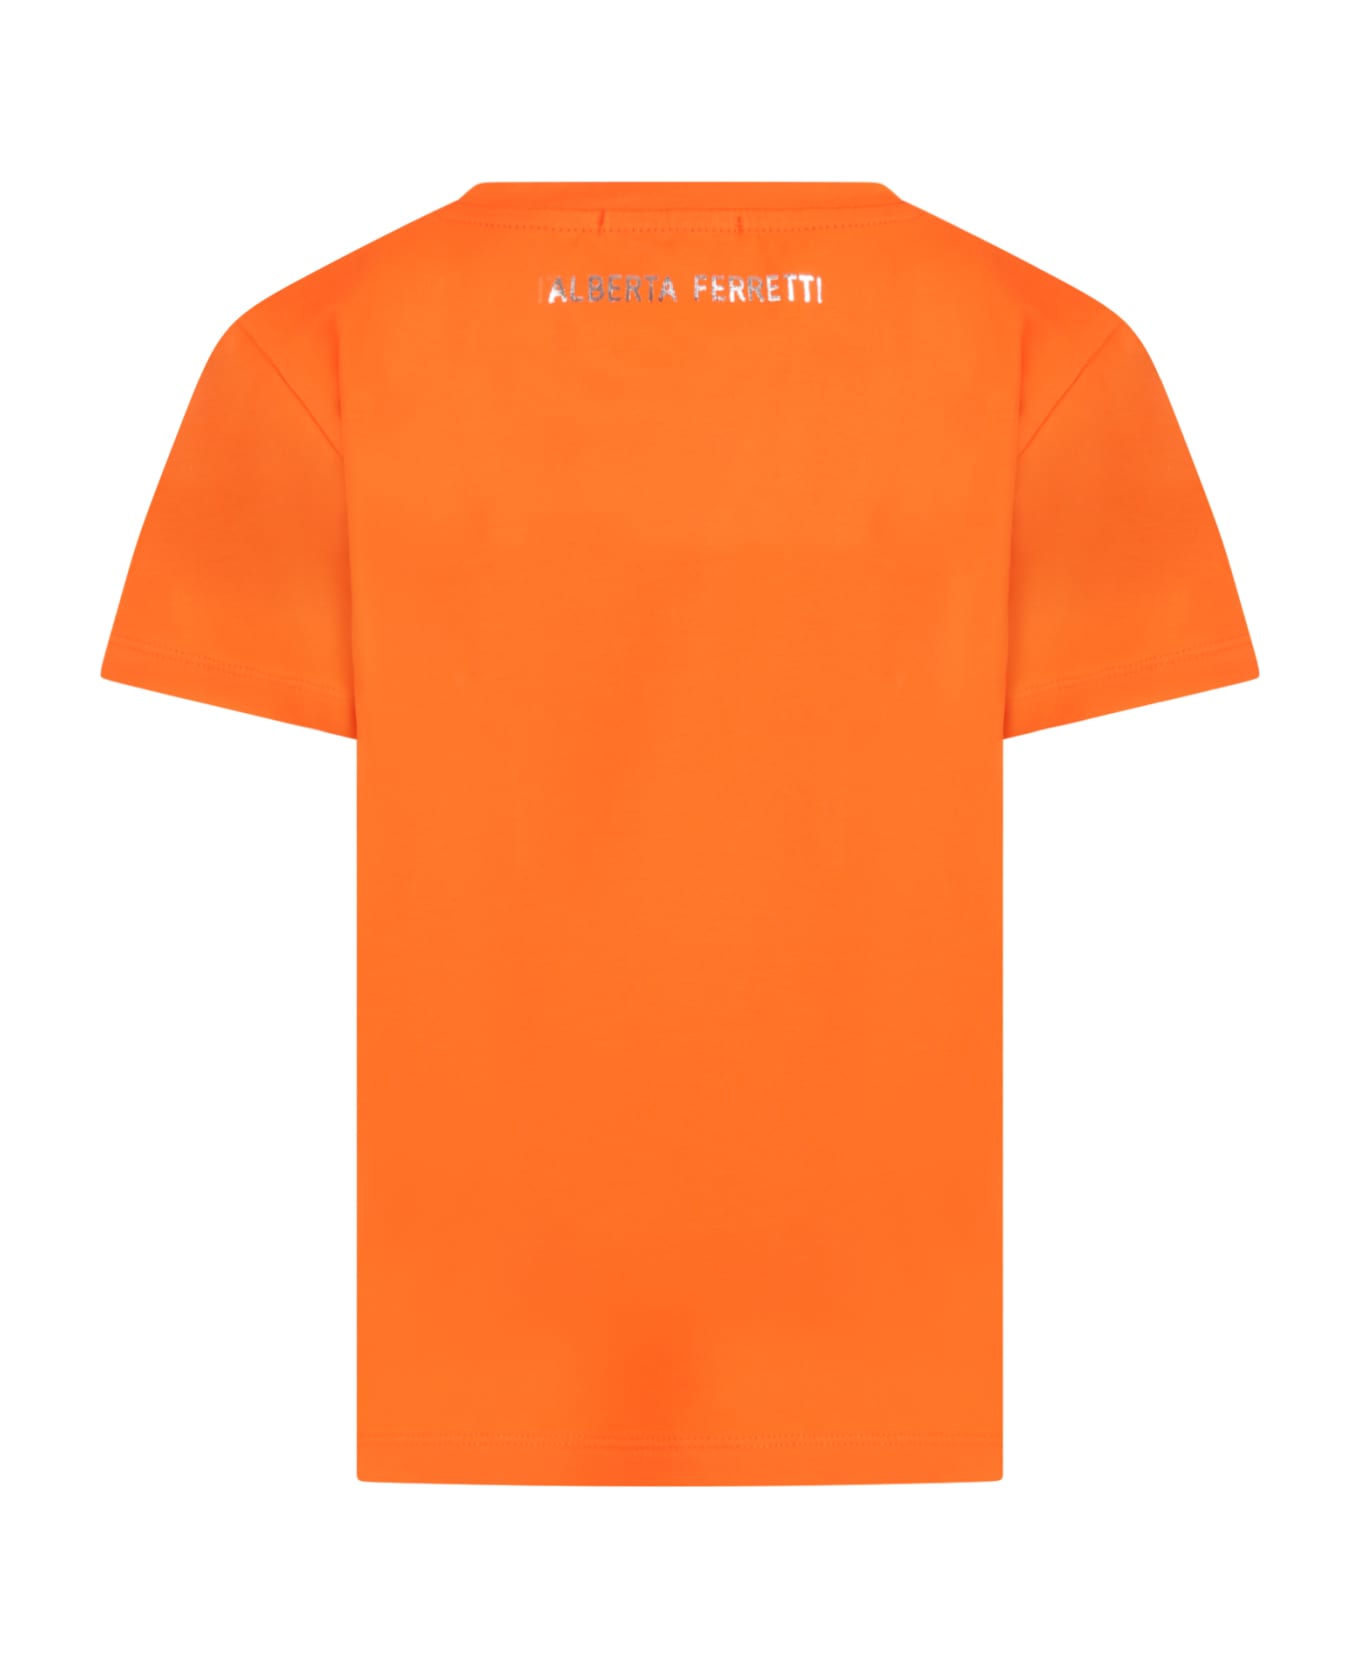 Alberta Ferretti Orange T-shirt For Girl With Silver Logo - Orange